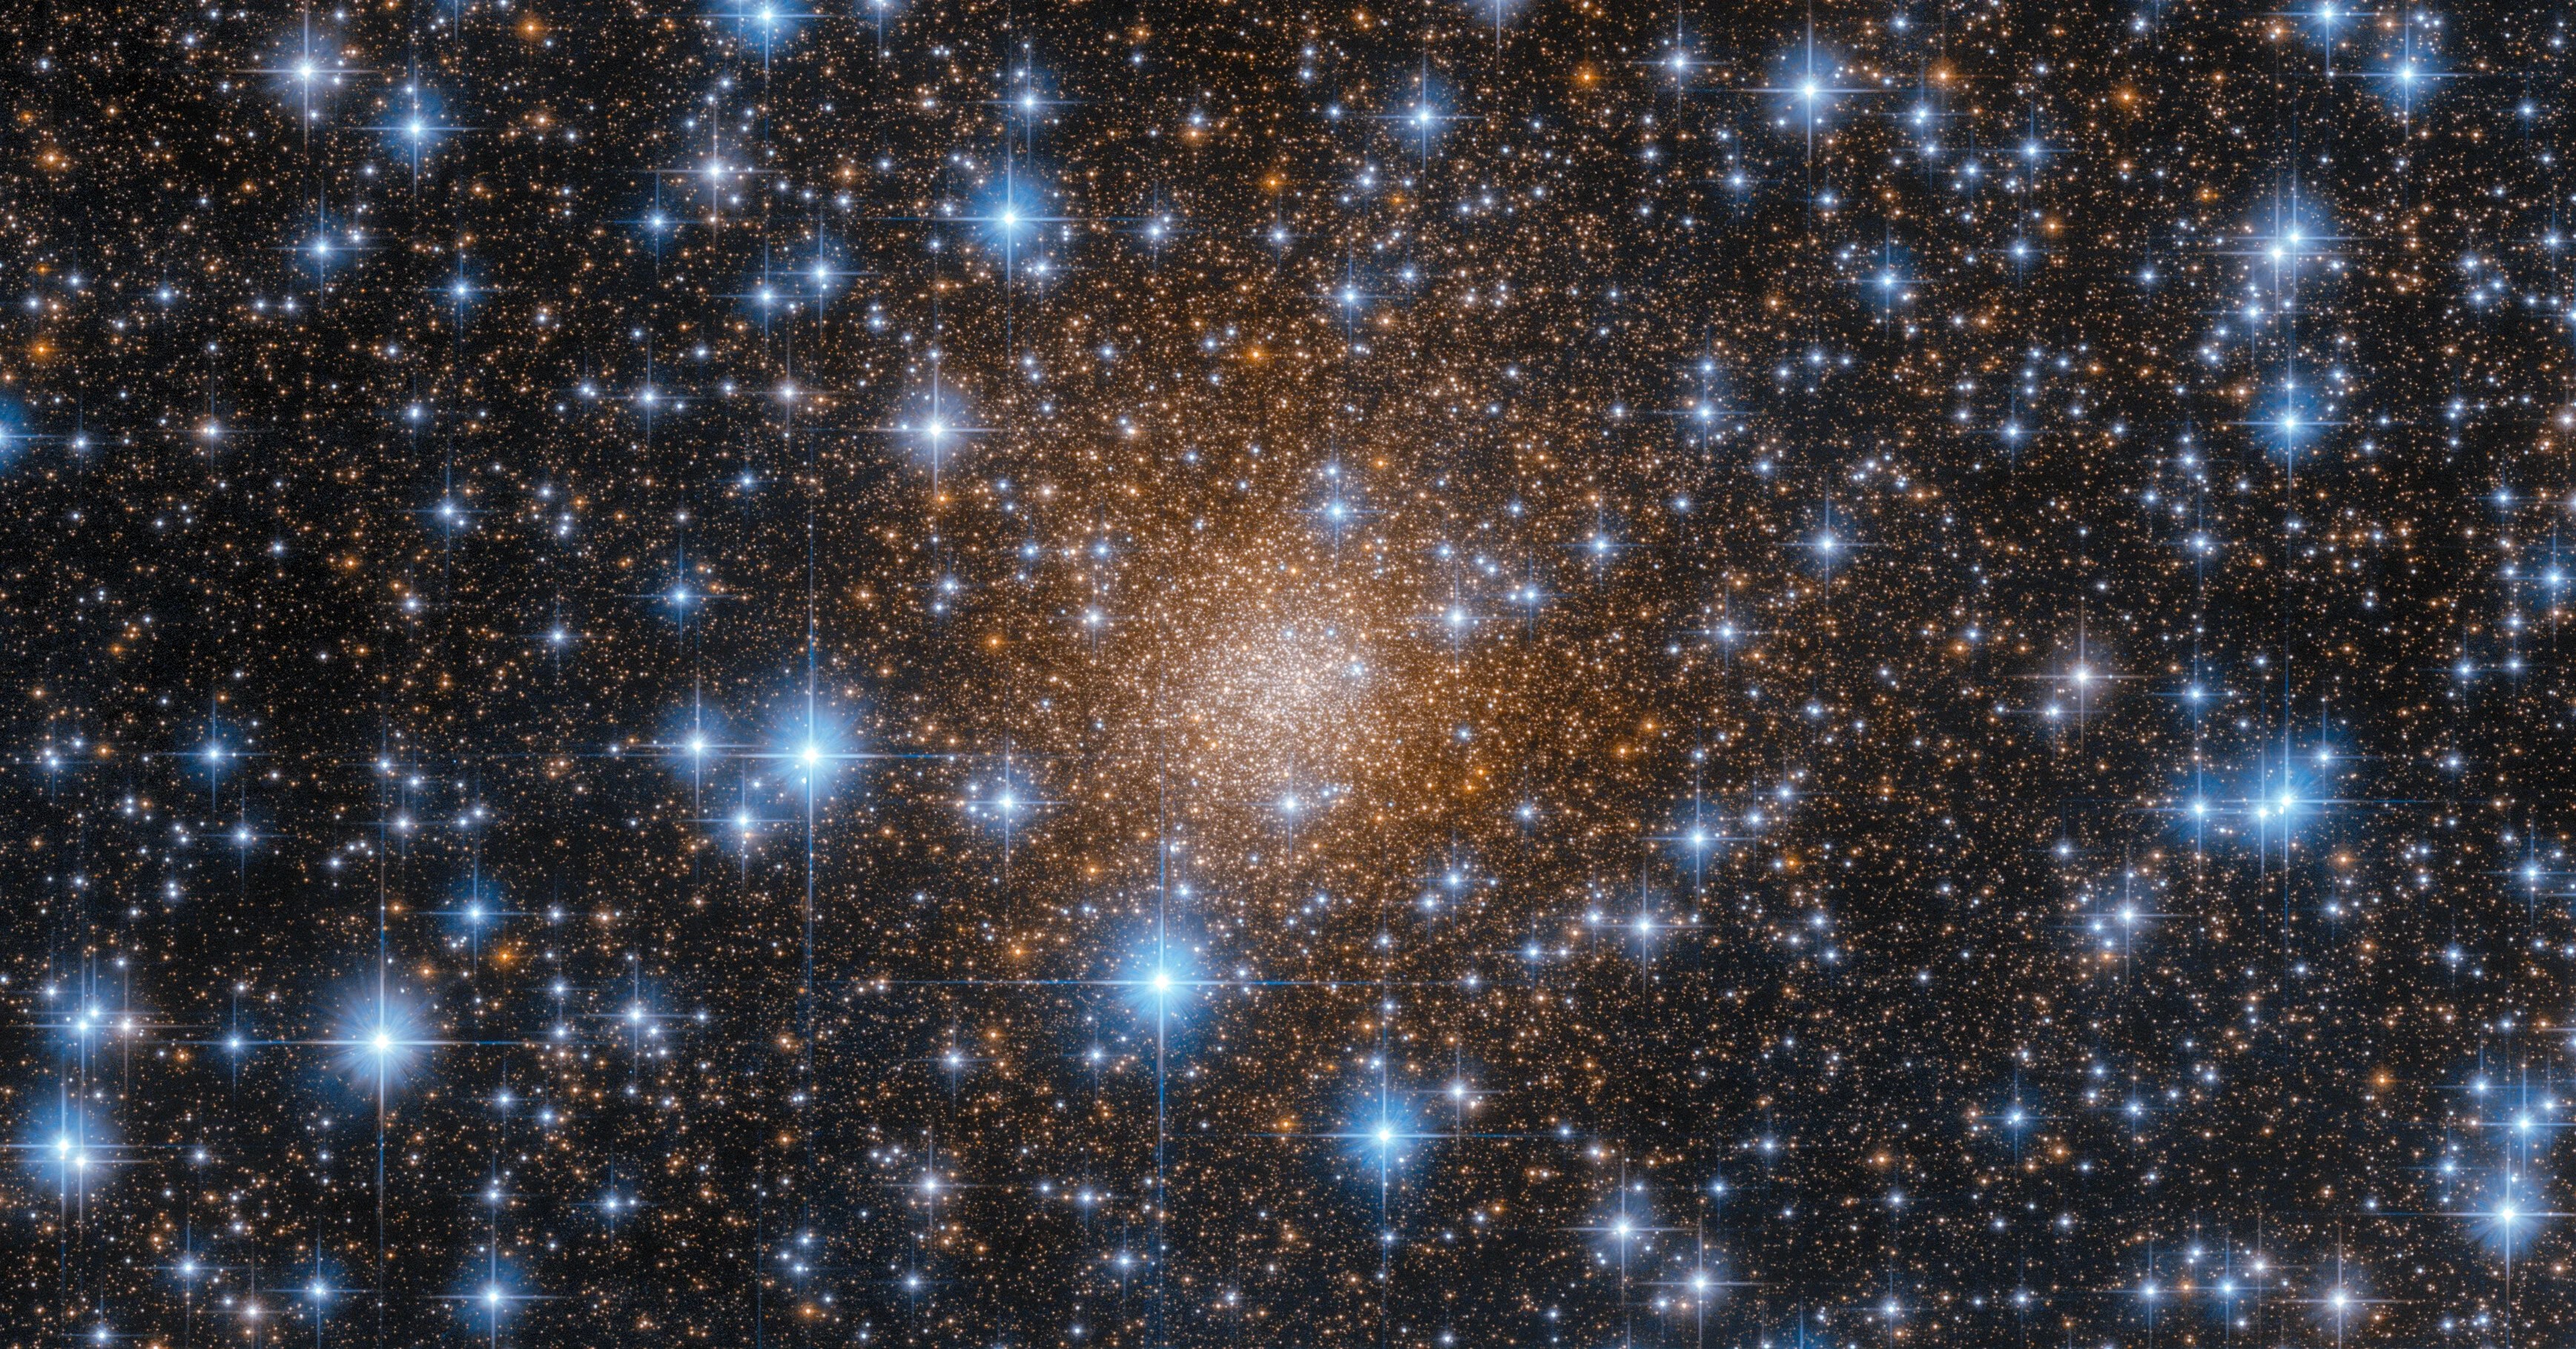 Dense cluster of orange-white stars at center. bright blue-white stars cover the field of view.